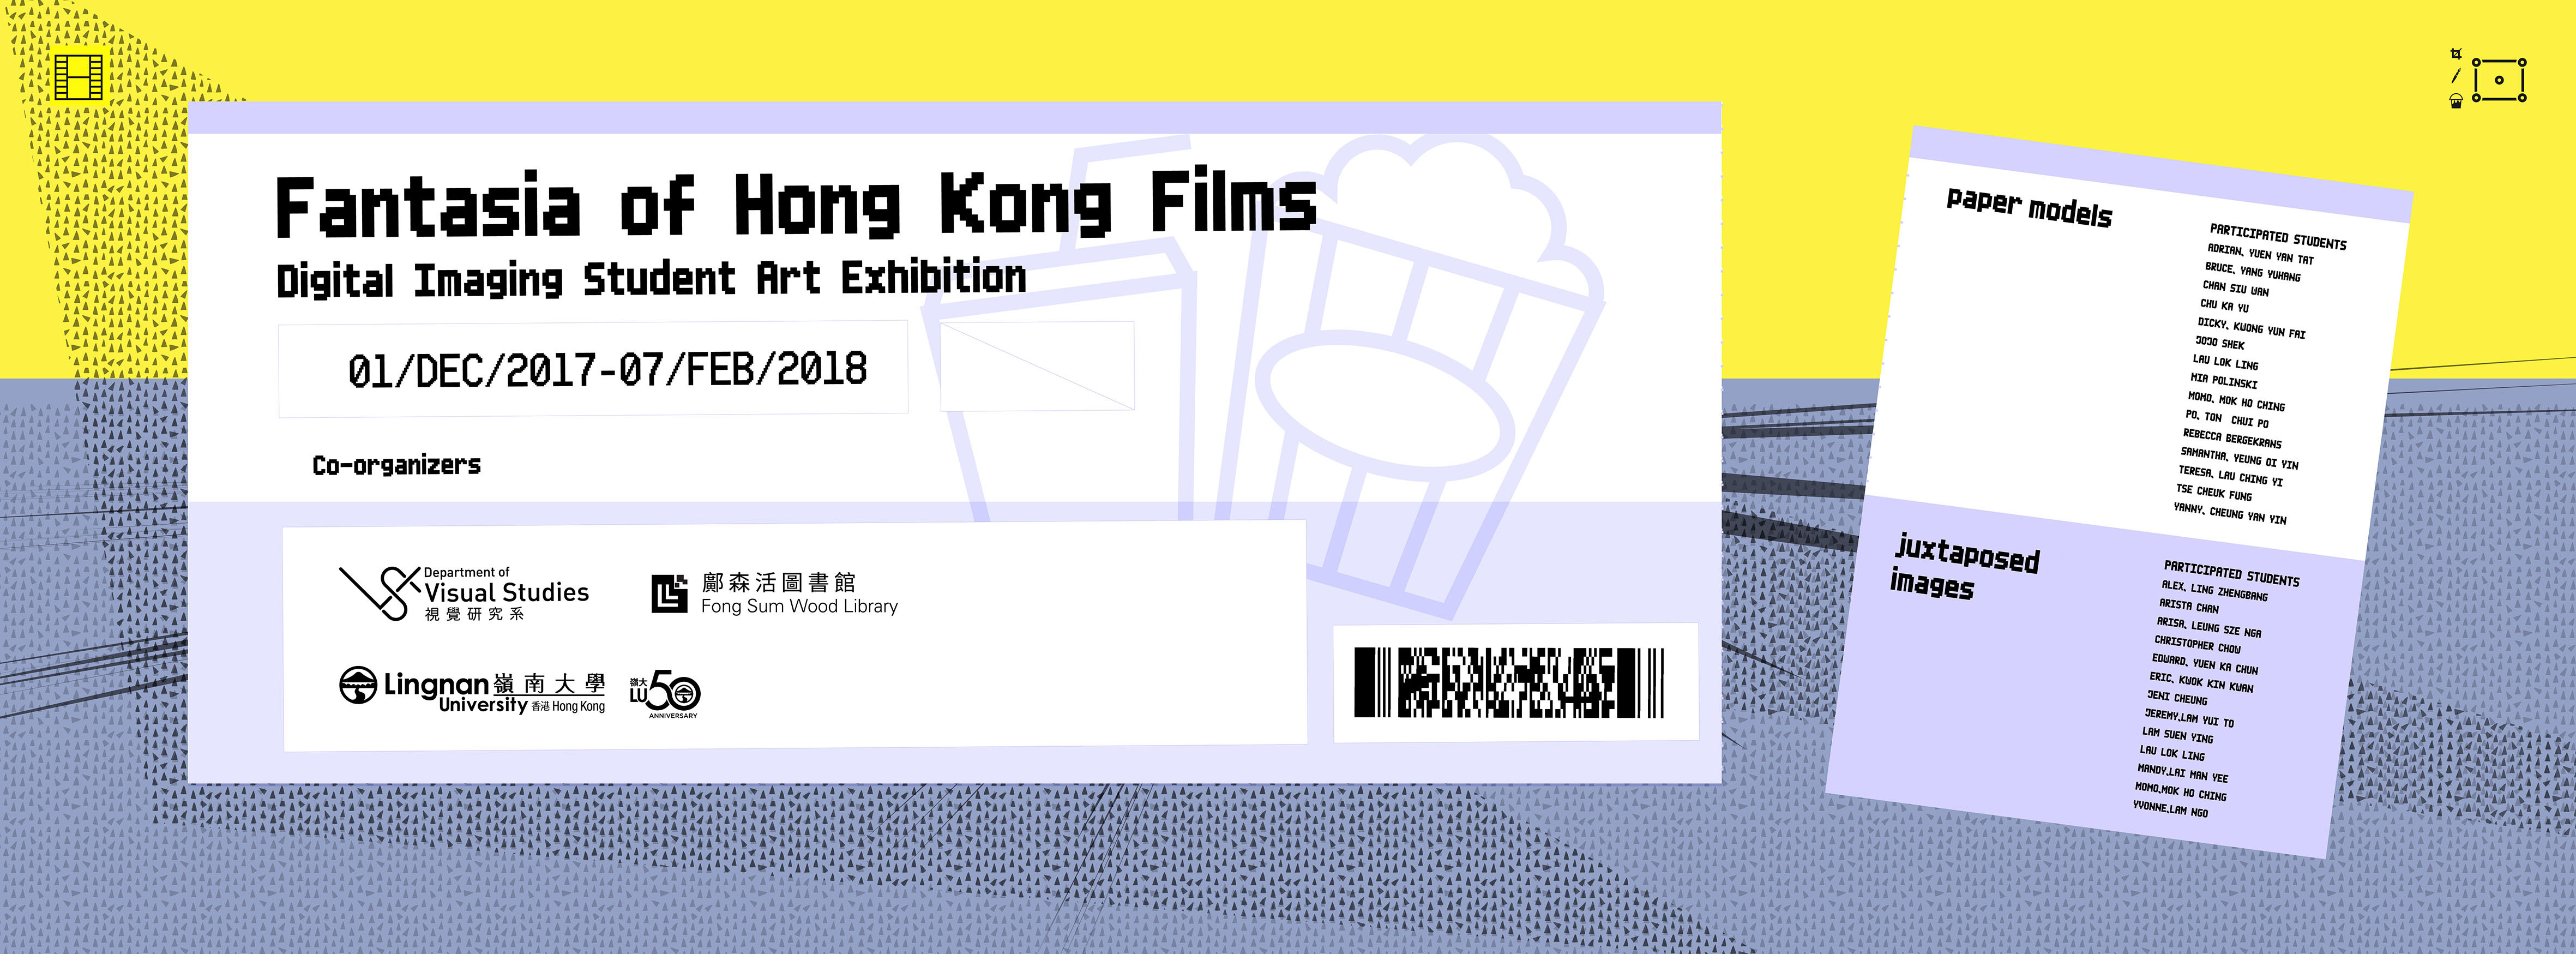 Fantasia of Hong Kong Films — Digital Imaging Student Art Exhibition